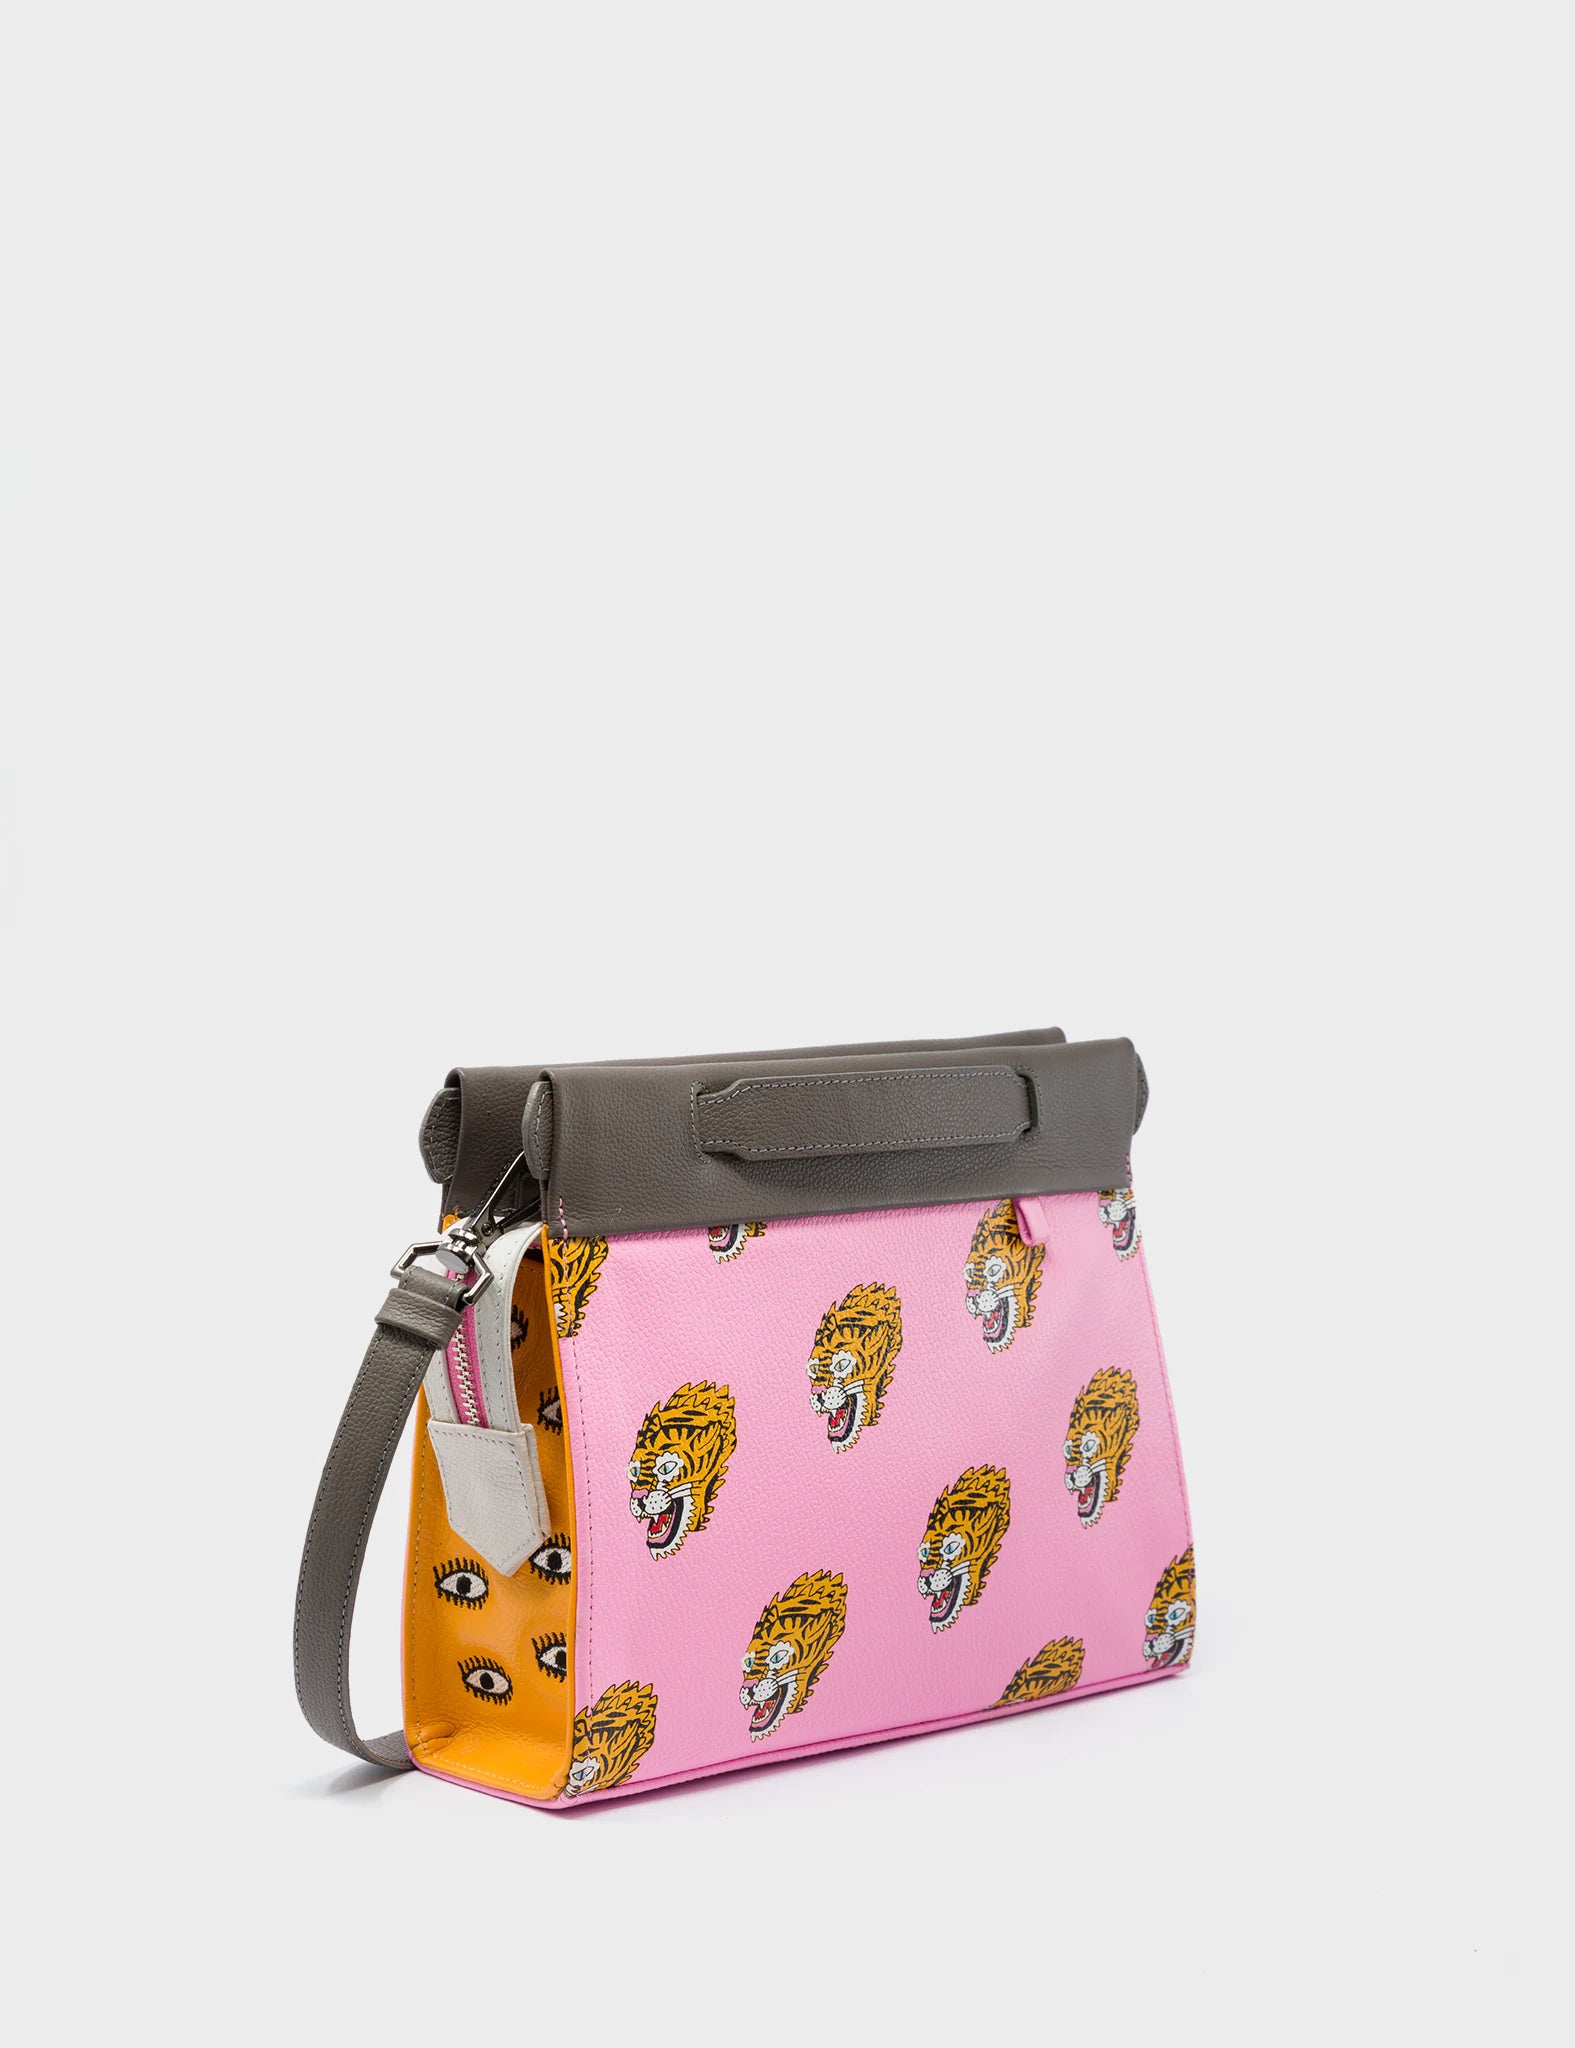 Vali Crossbody Small Taffy Pink Leather Bag - El Tropico Print and Embroidery Design